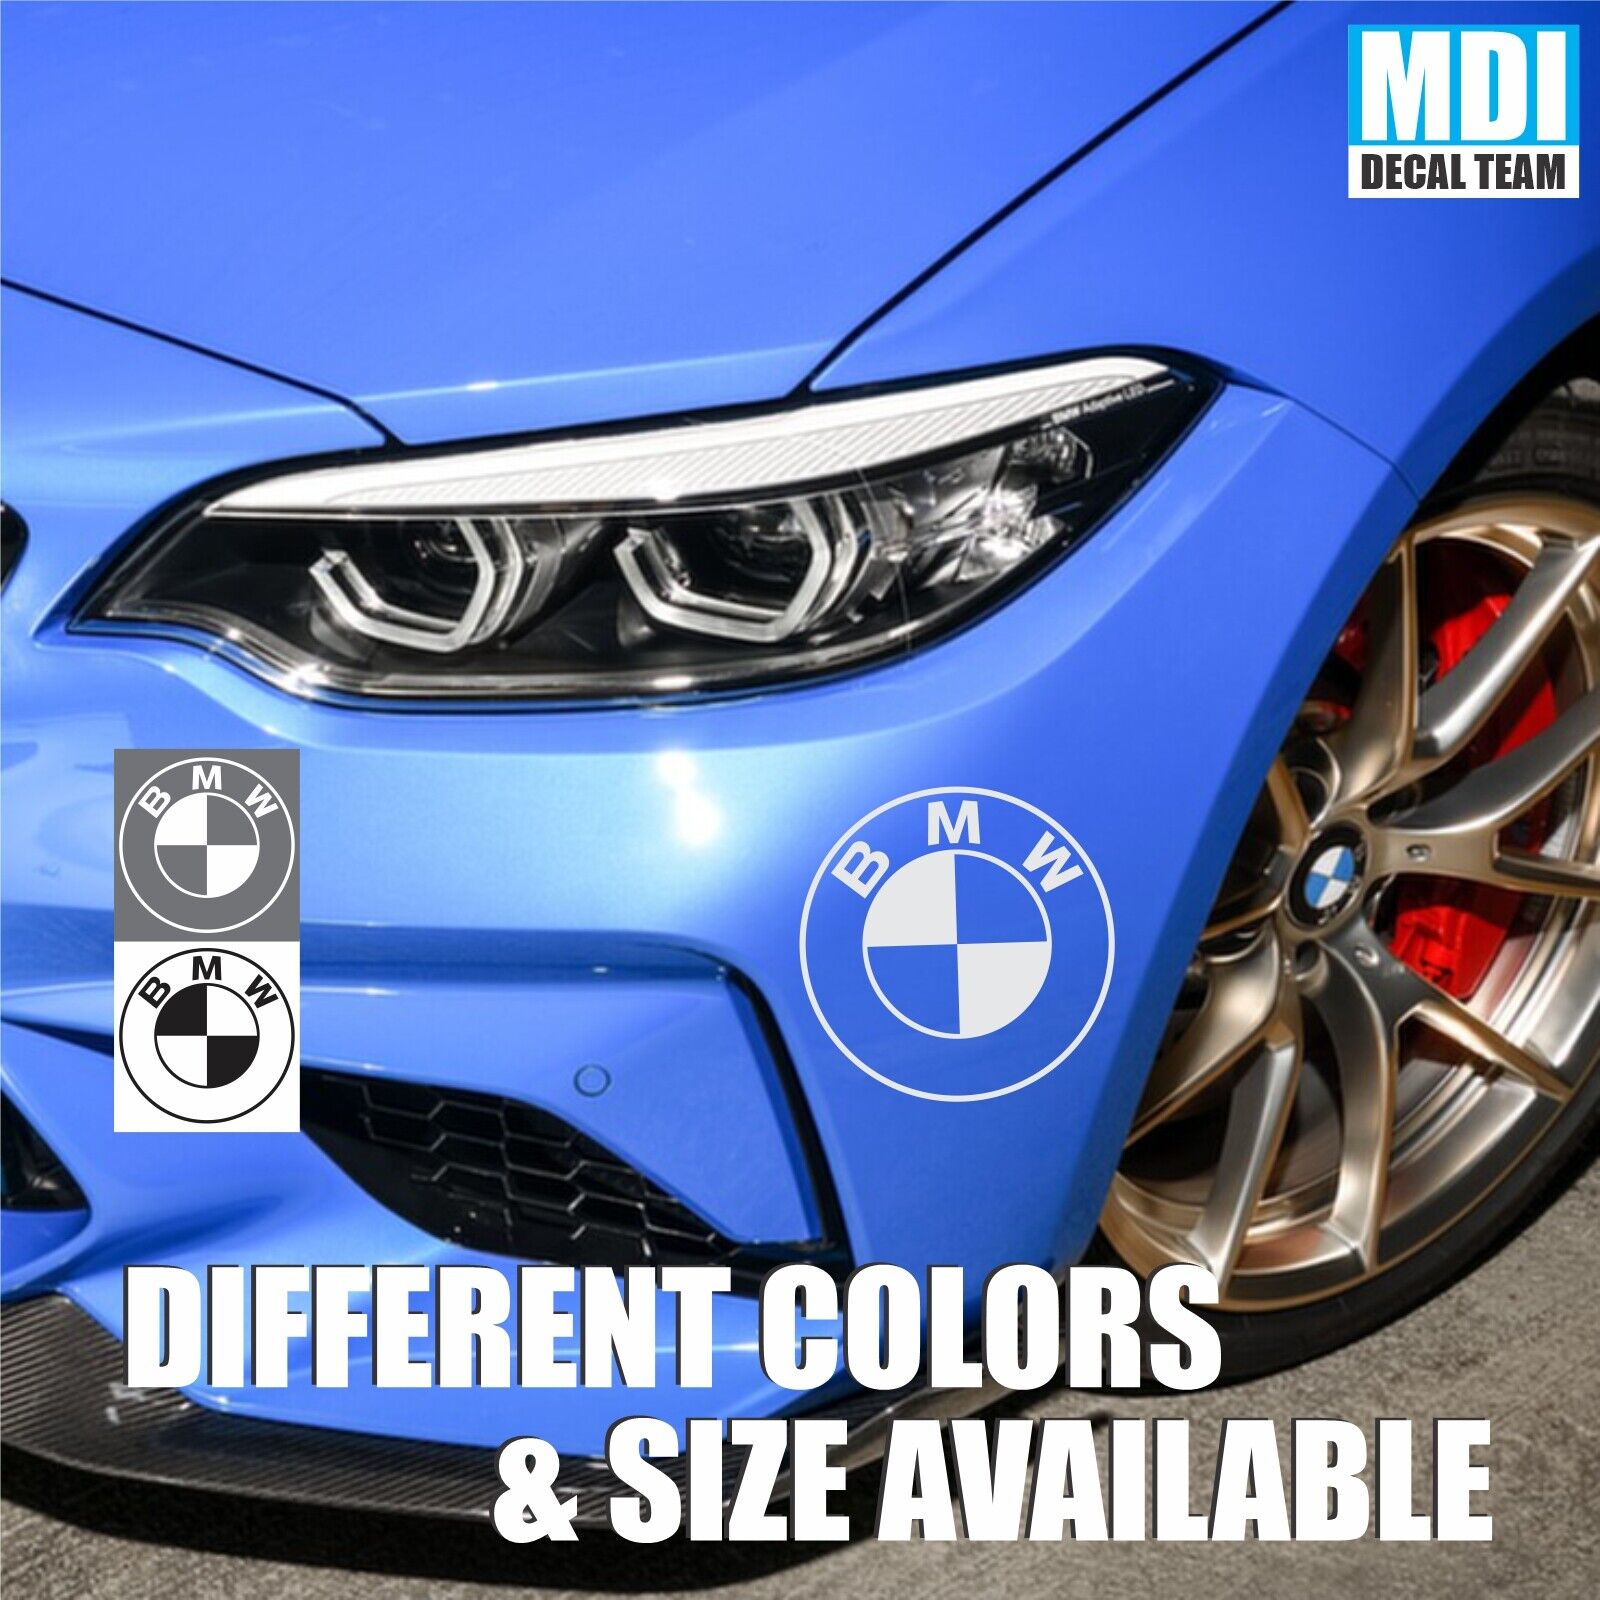 BMW Vinyl Decal Sticker Emblem Logo JDM Germany car m2 m3 m5 7 x5 x3 performance